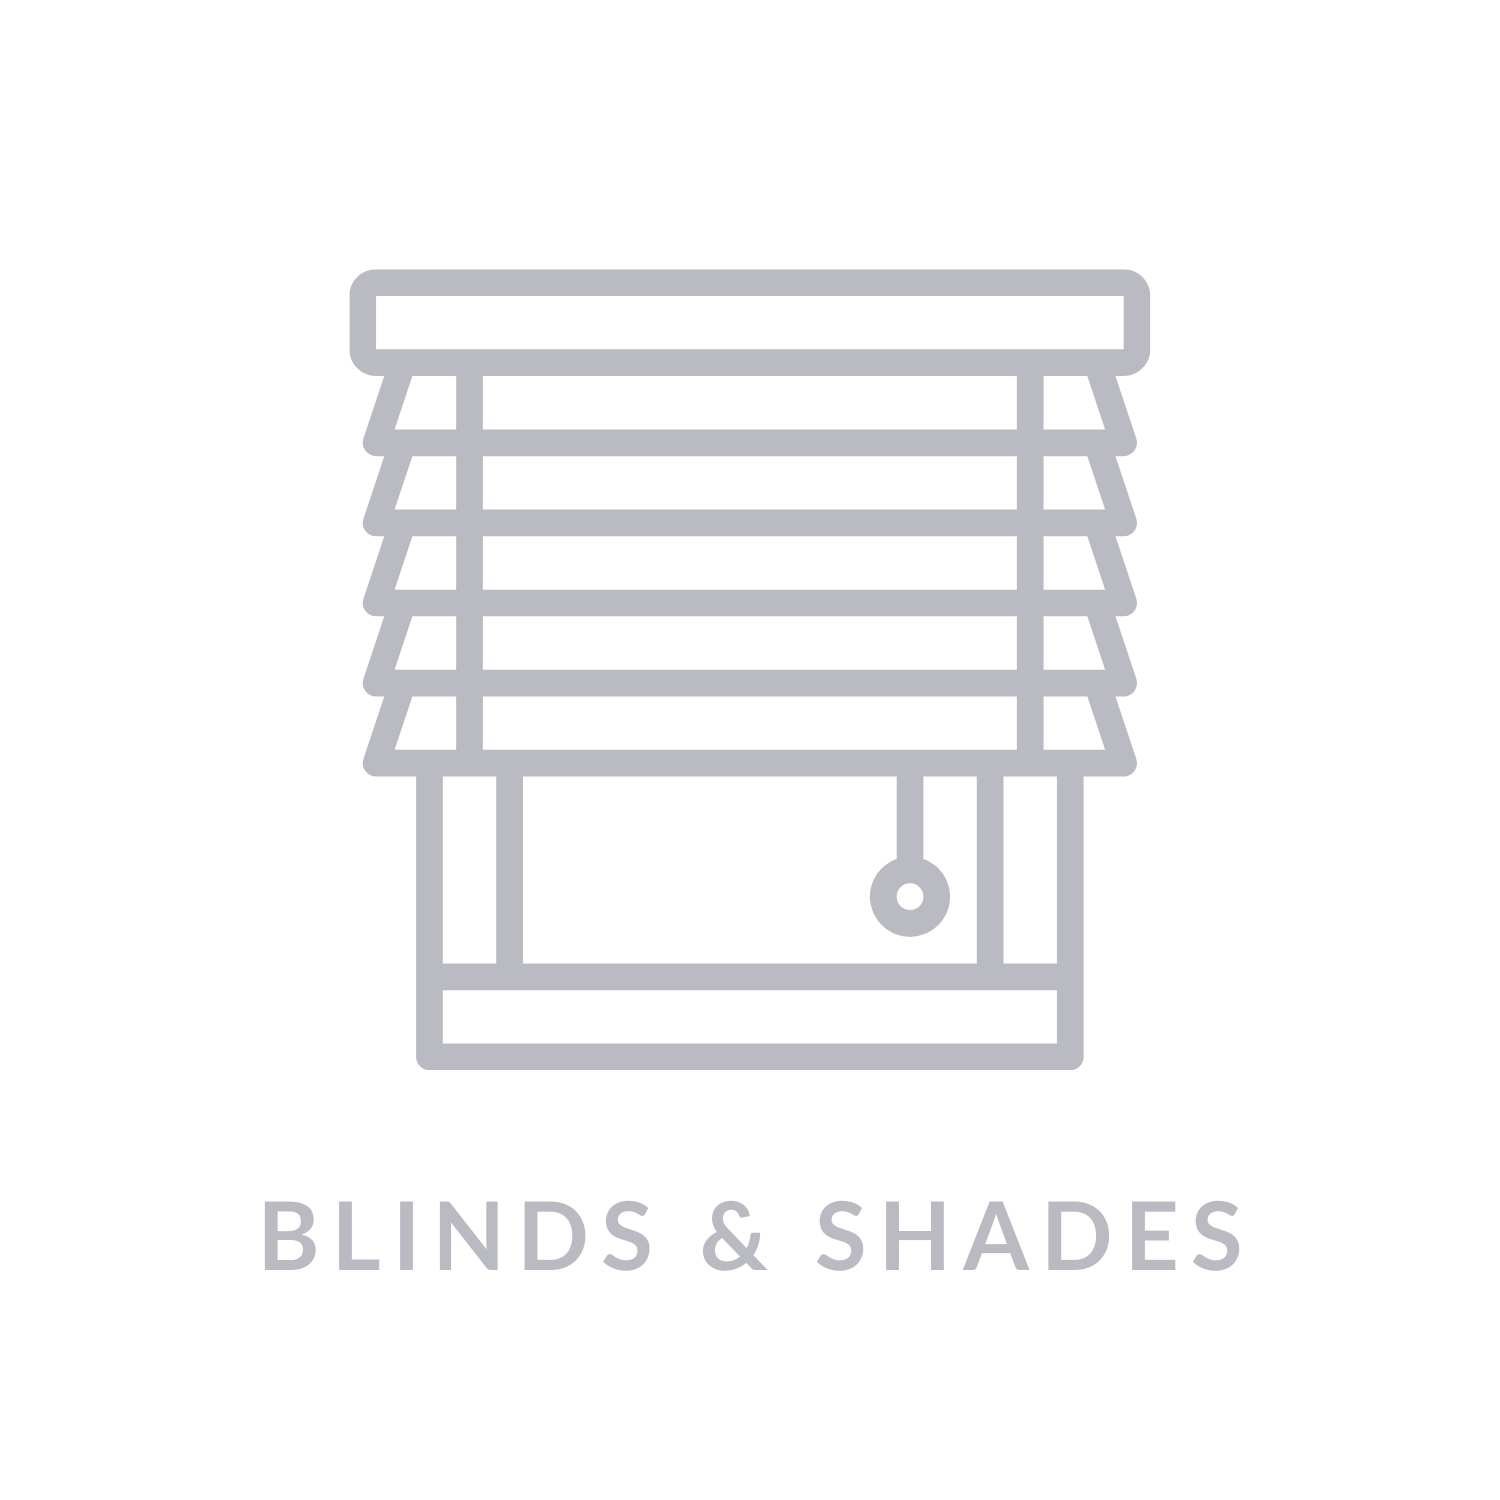 Blinds & Shades OFF.jpg